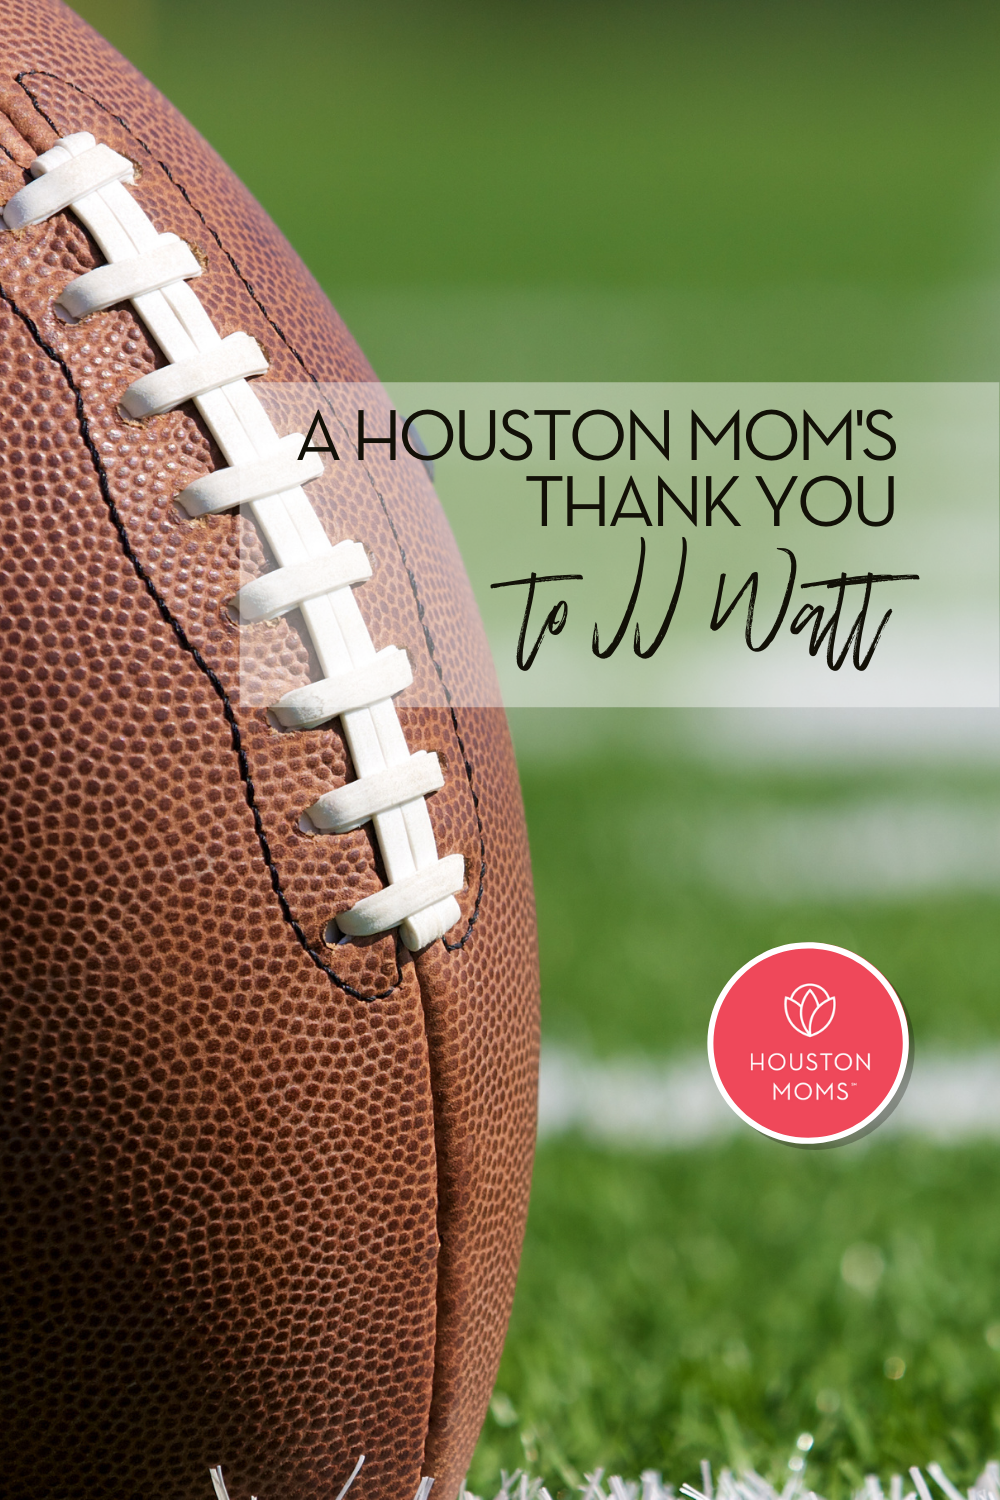 Houston Moms "A Houston Mom's Thank You to JJ Watt" #houstonmomsblog #houstonmoms #momsaroundhouston